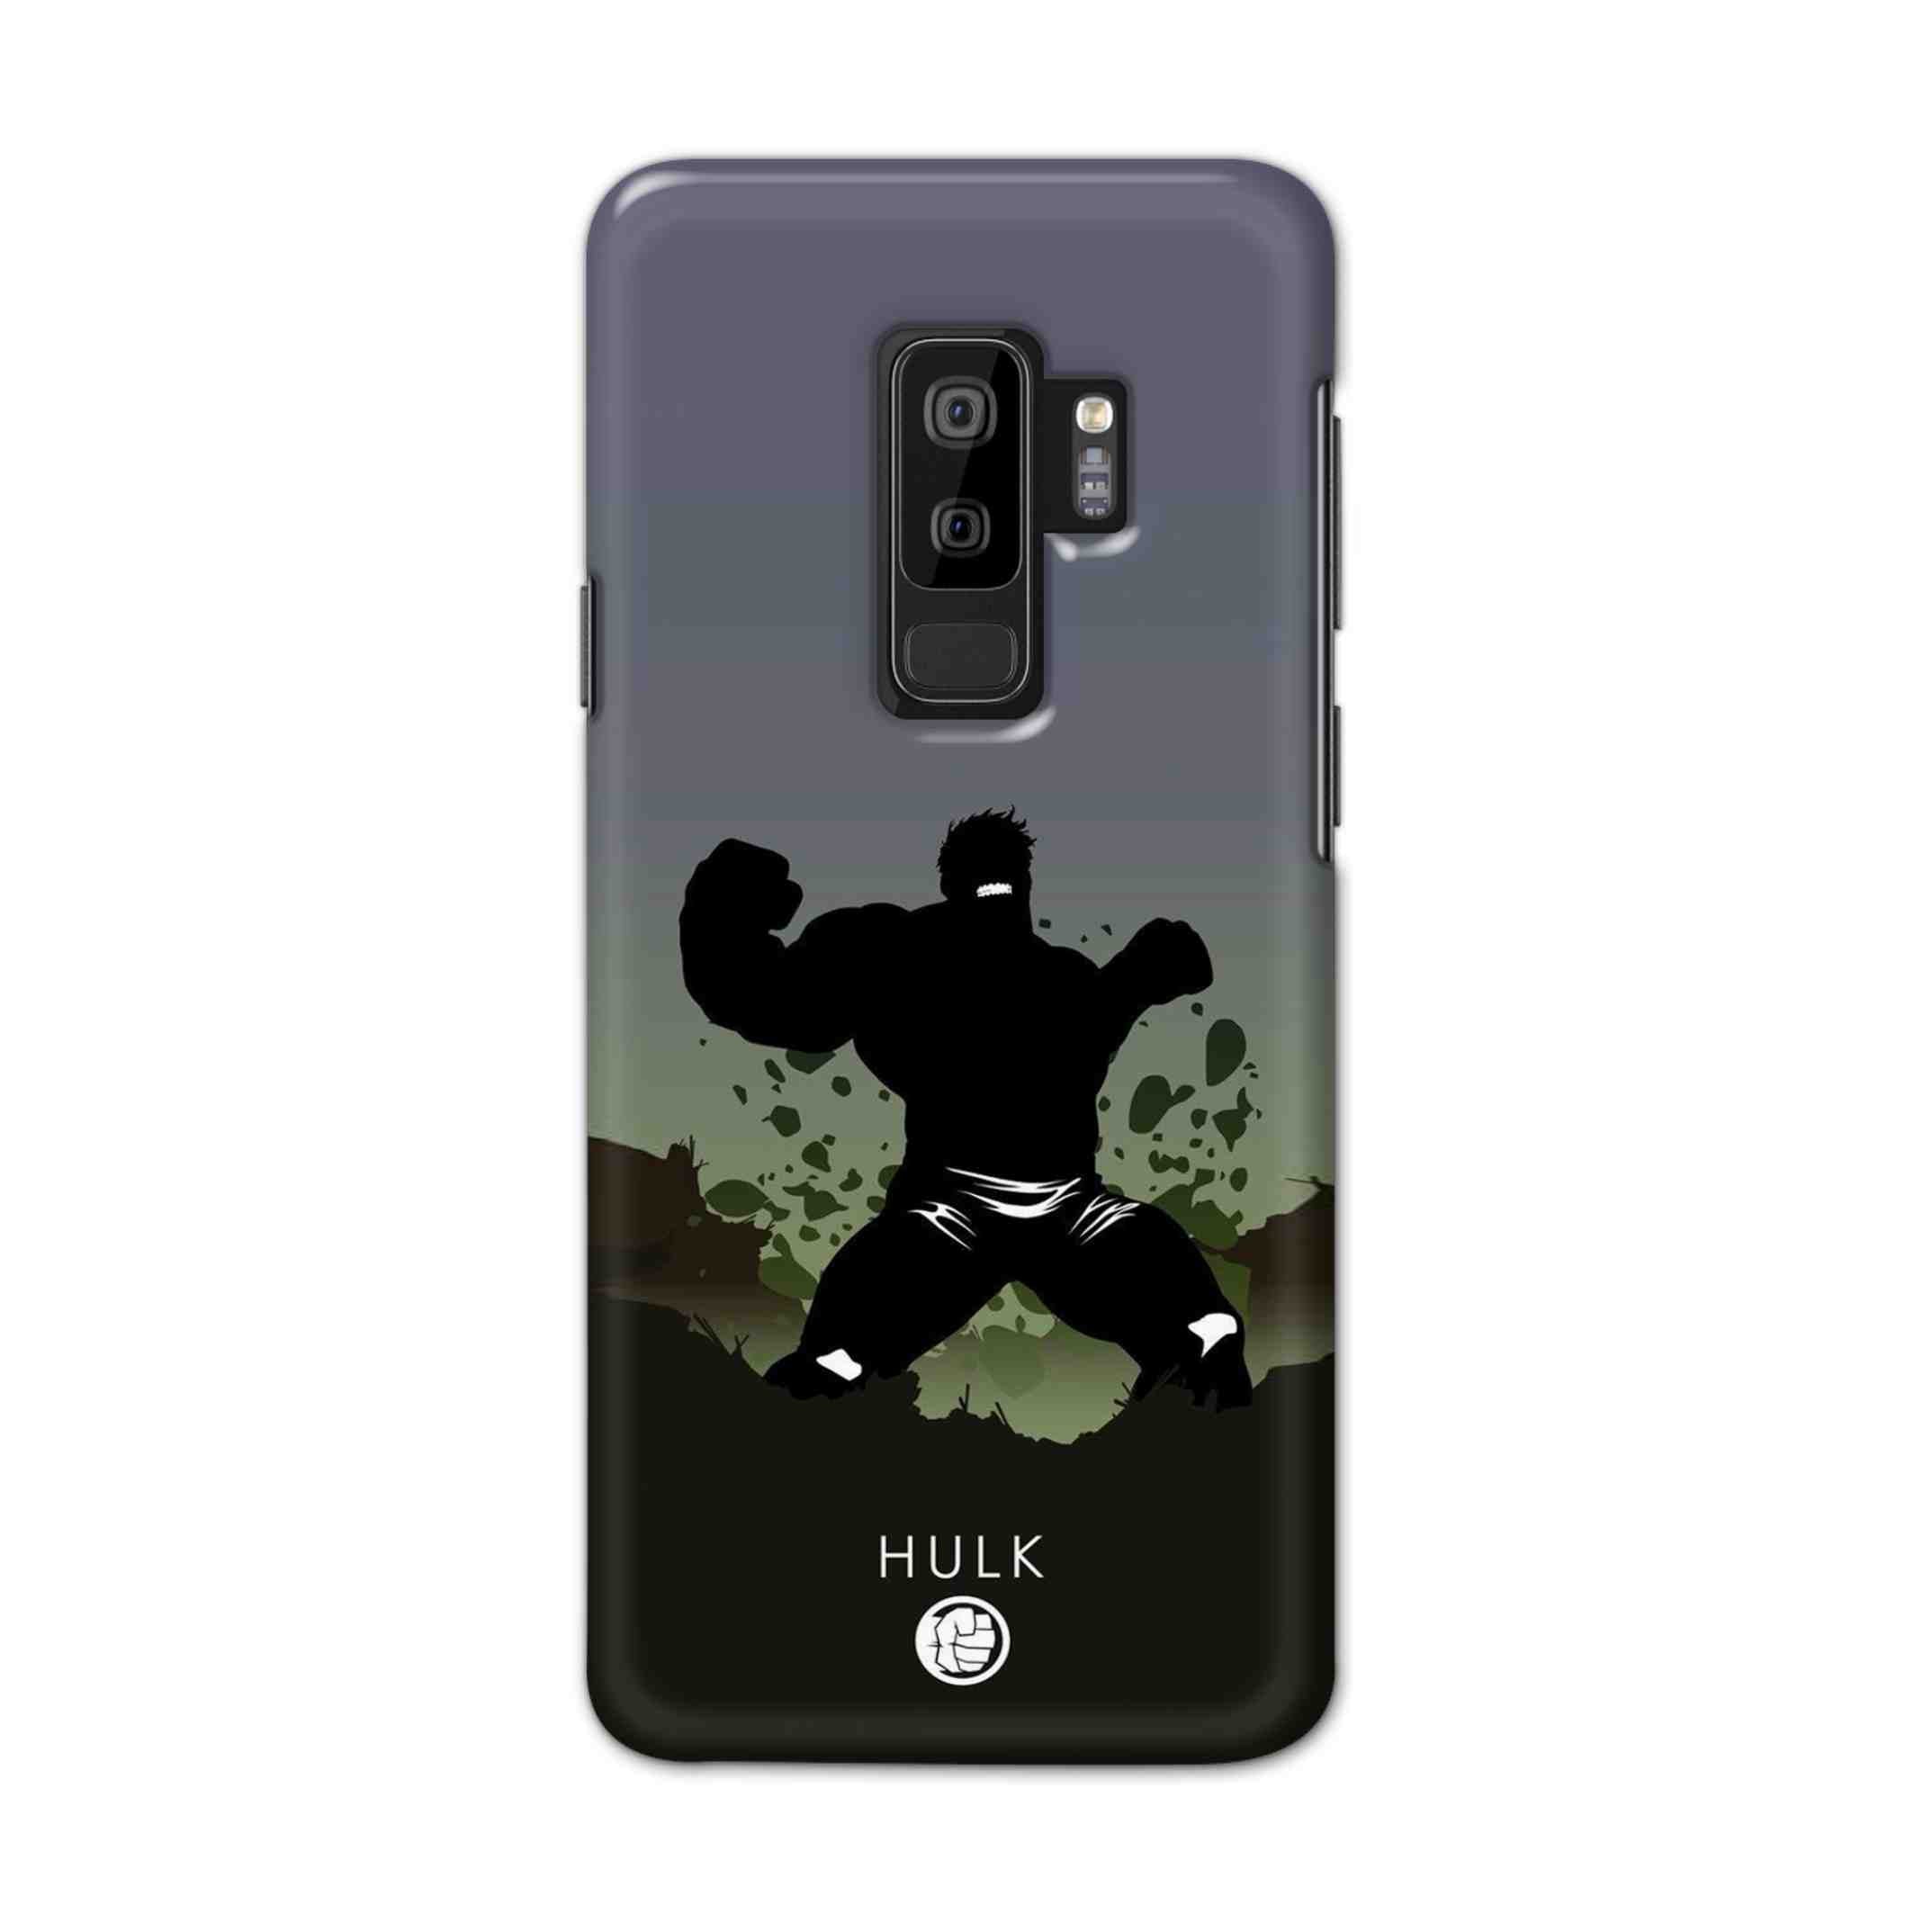 Buy Hulk Drax Hard Back Mobile Phone Case Cover For Samsung S9 plus Online